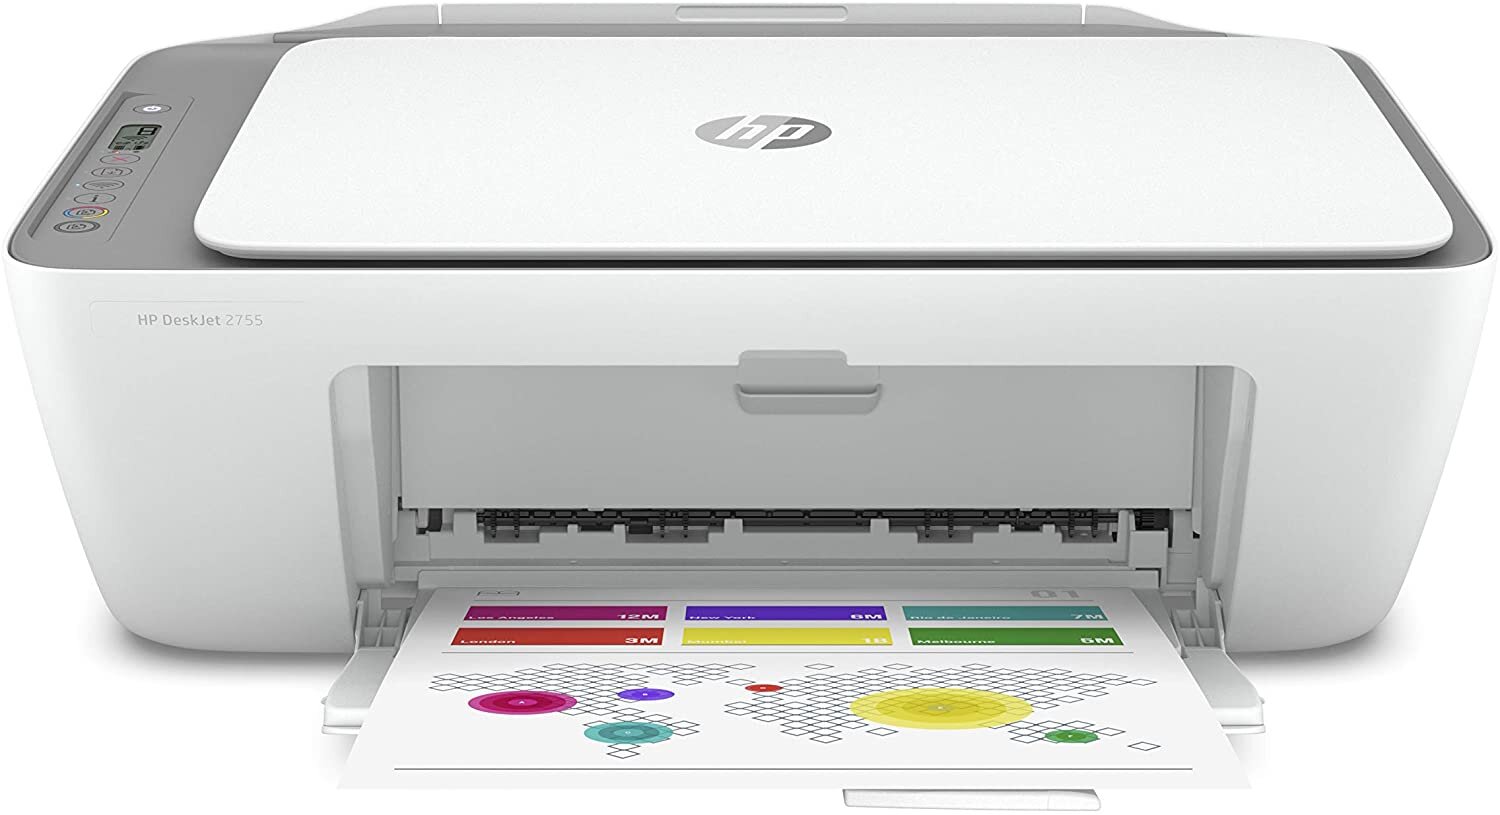 HP DeskJet 2755 Wireless All-in-One Printer